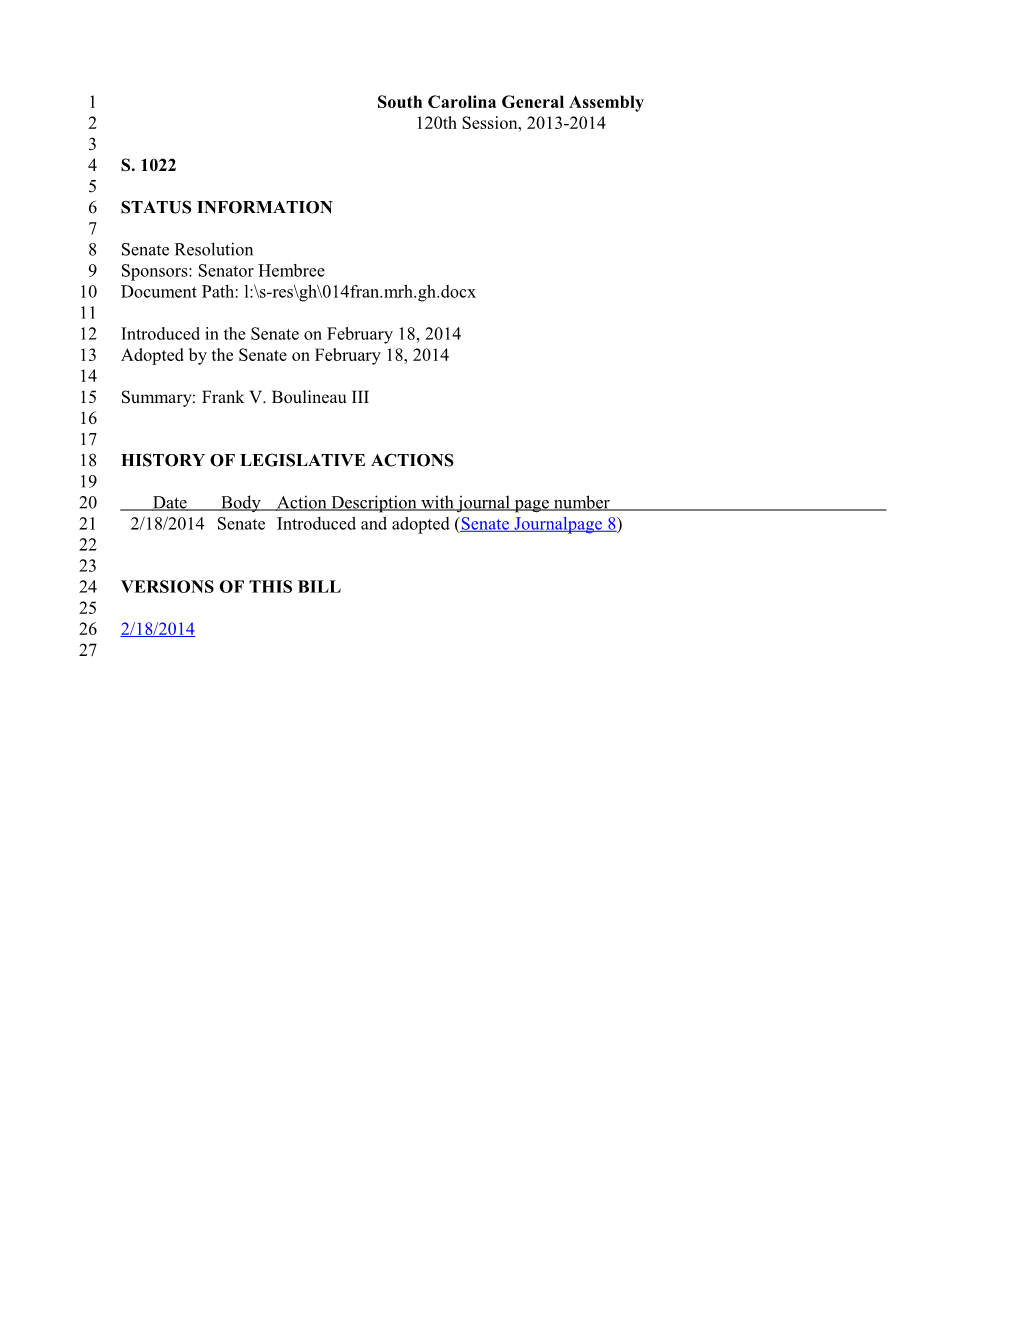 2013-2014 Bill 1022: Frank V. Boulineau III - South Carolina Legislature Online